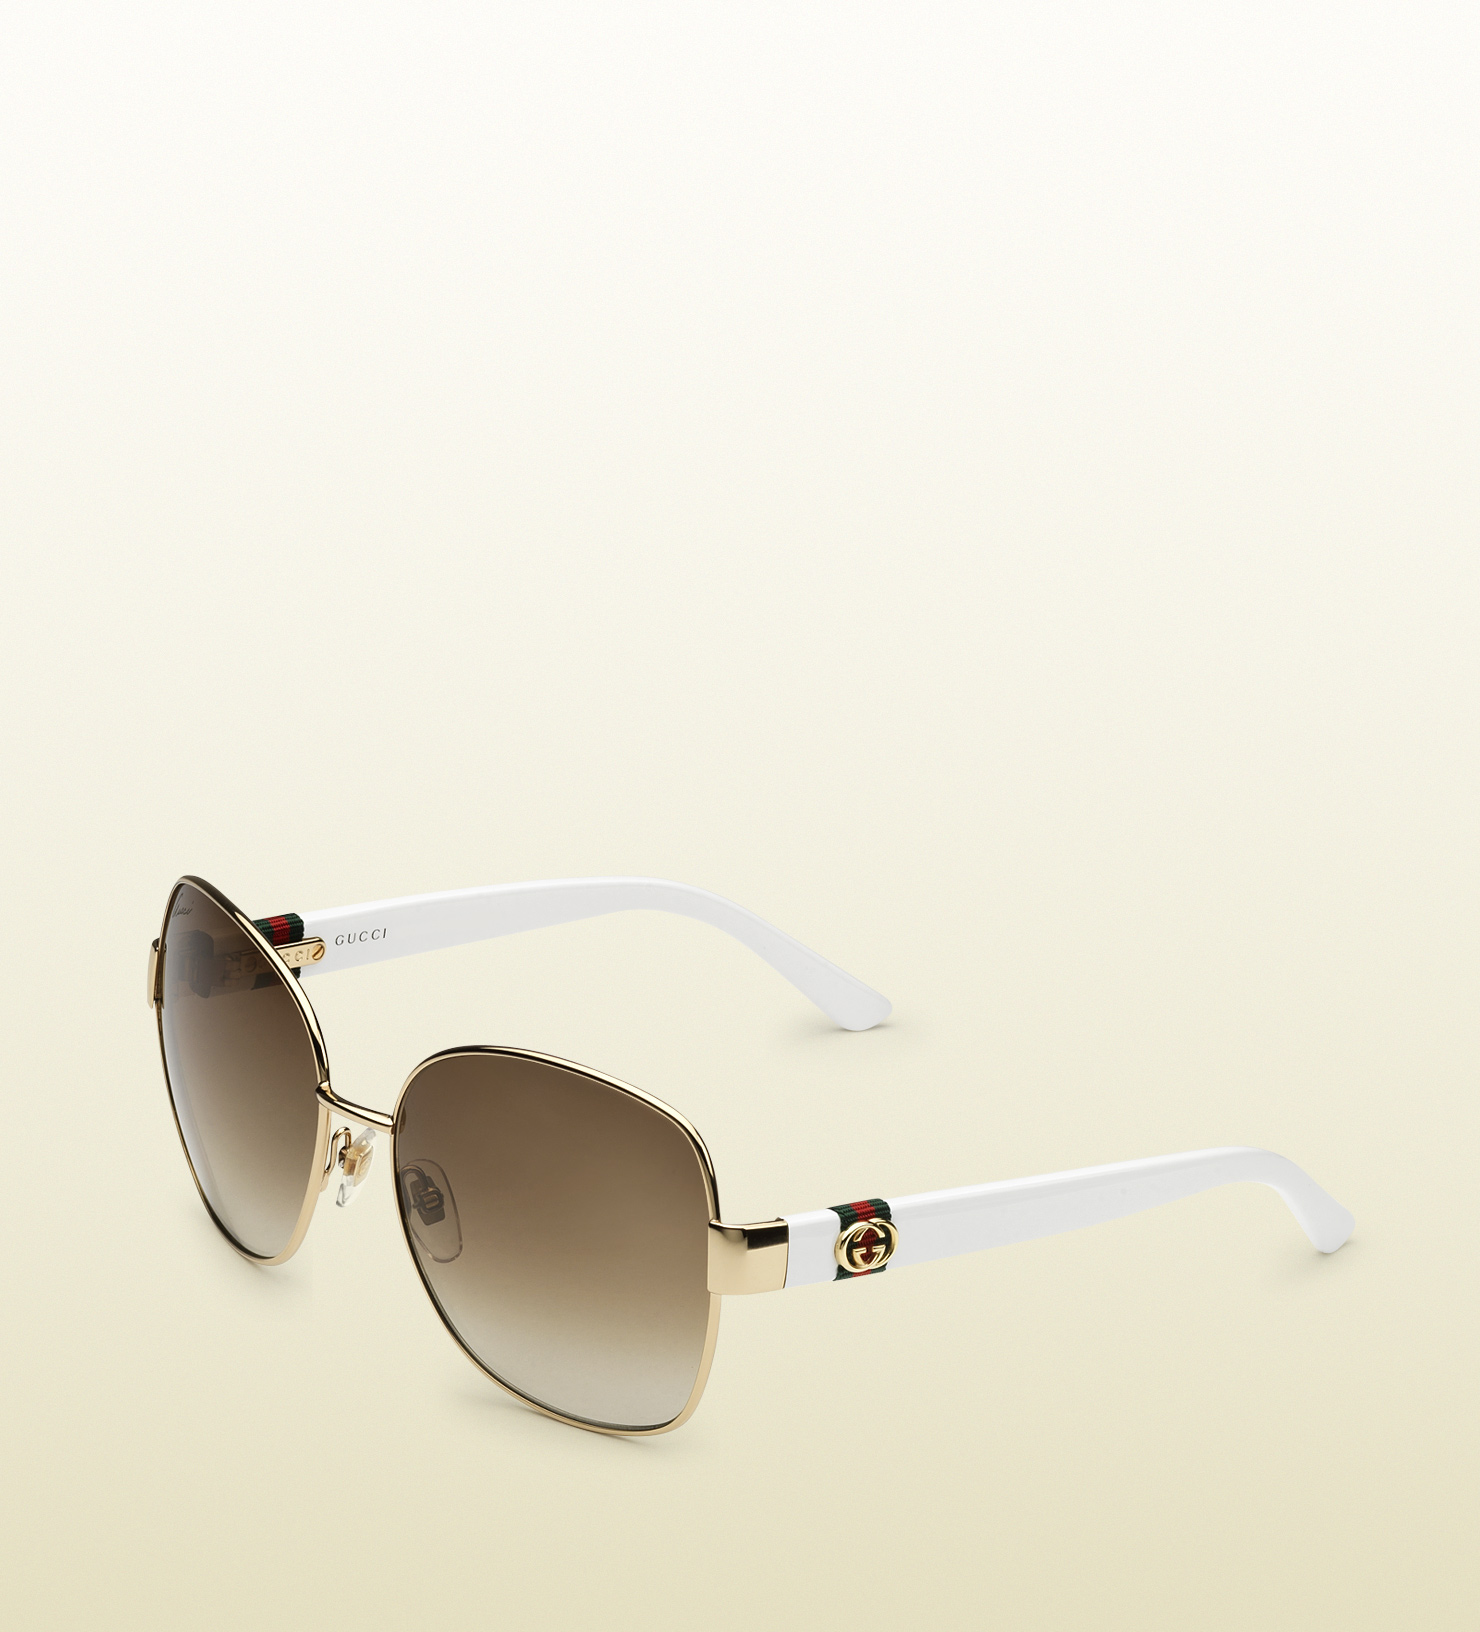 gucci sunglasses white frame